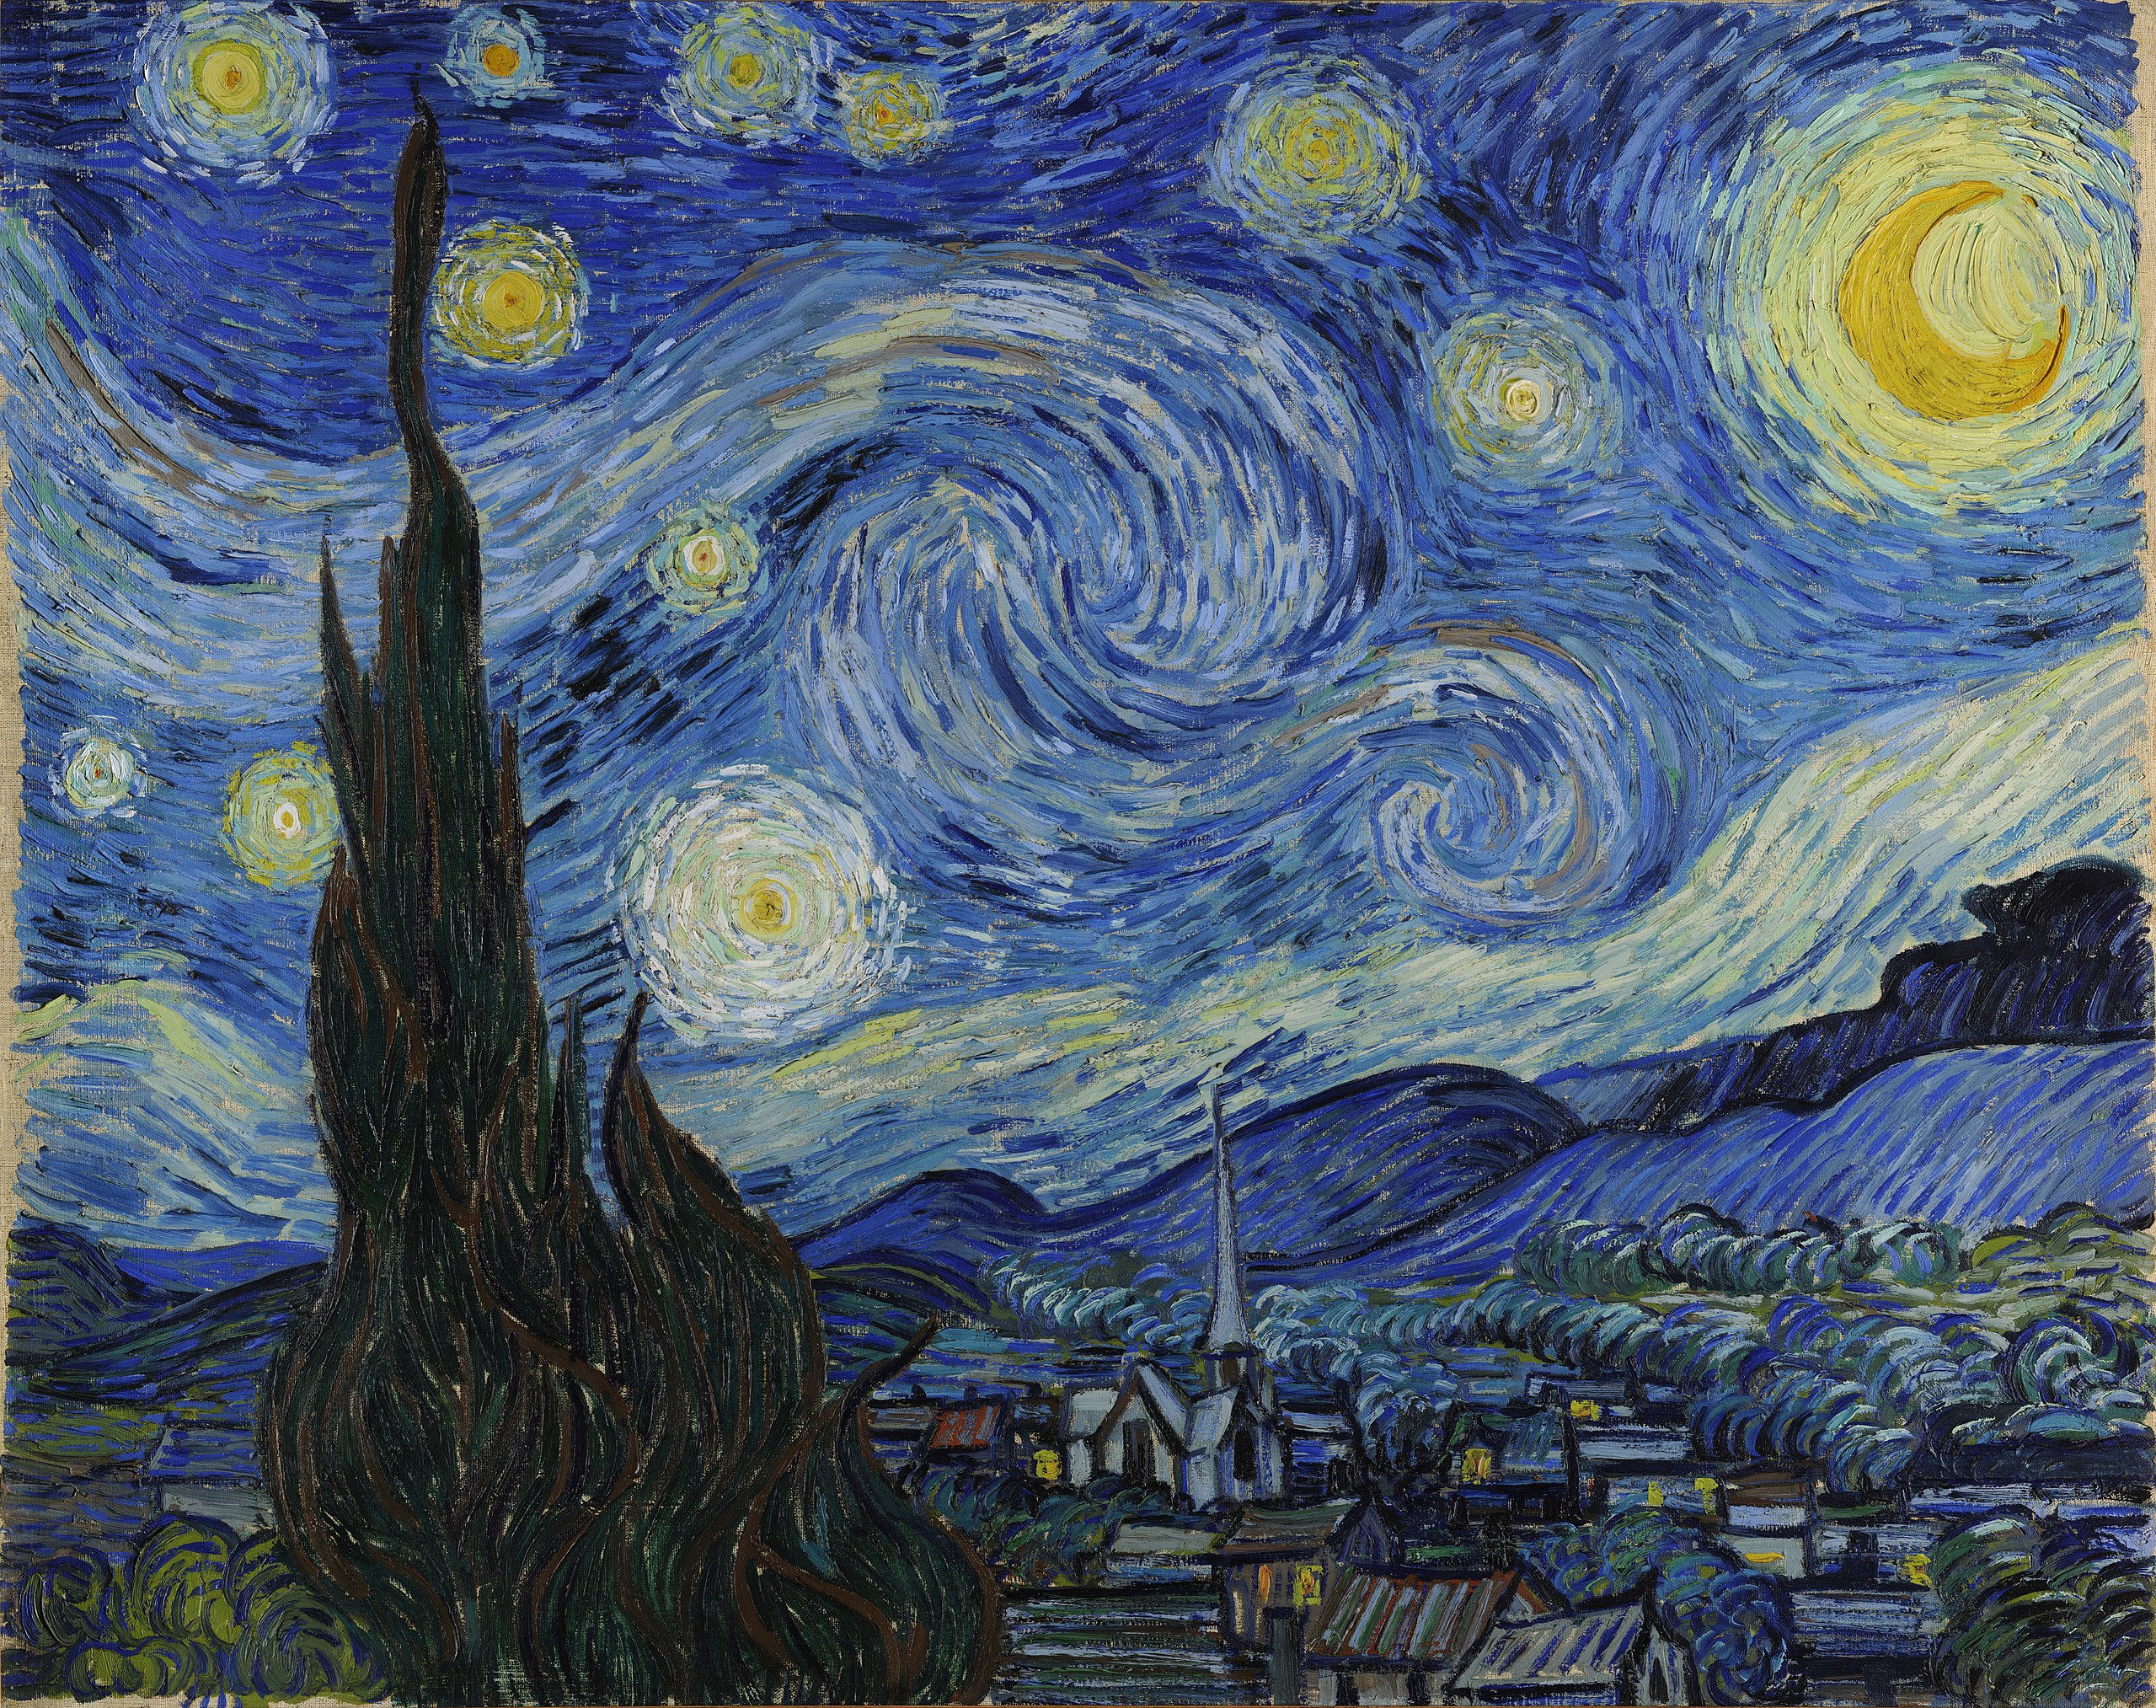 Sternennacht by Vincent van Gogh - 1889 - 73,7 × 92,1 cm Museum of Modern Art